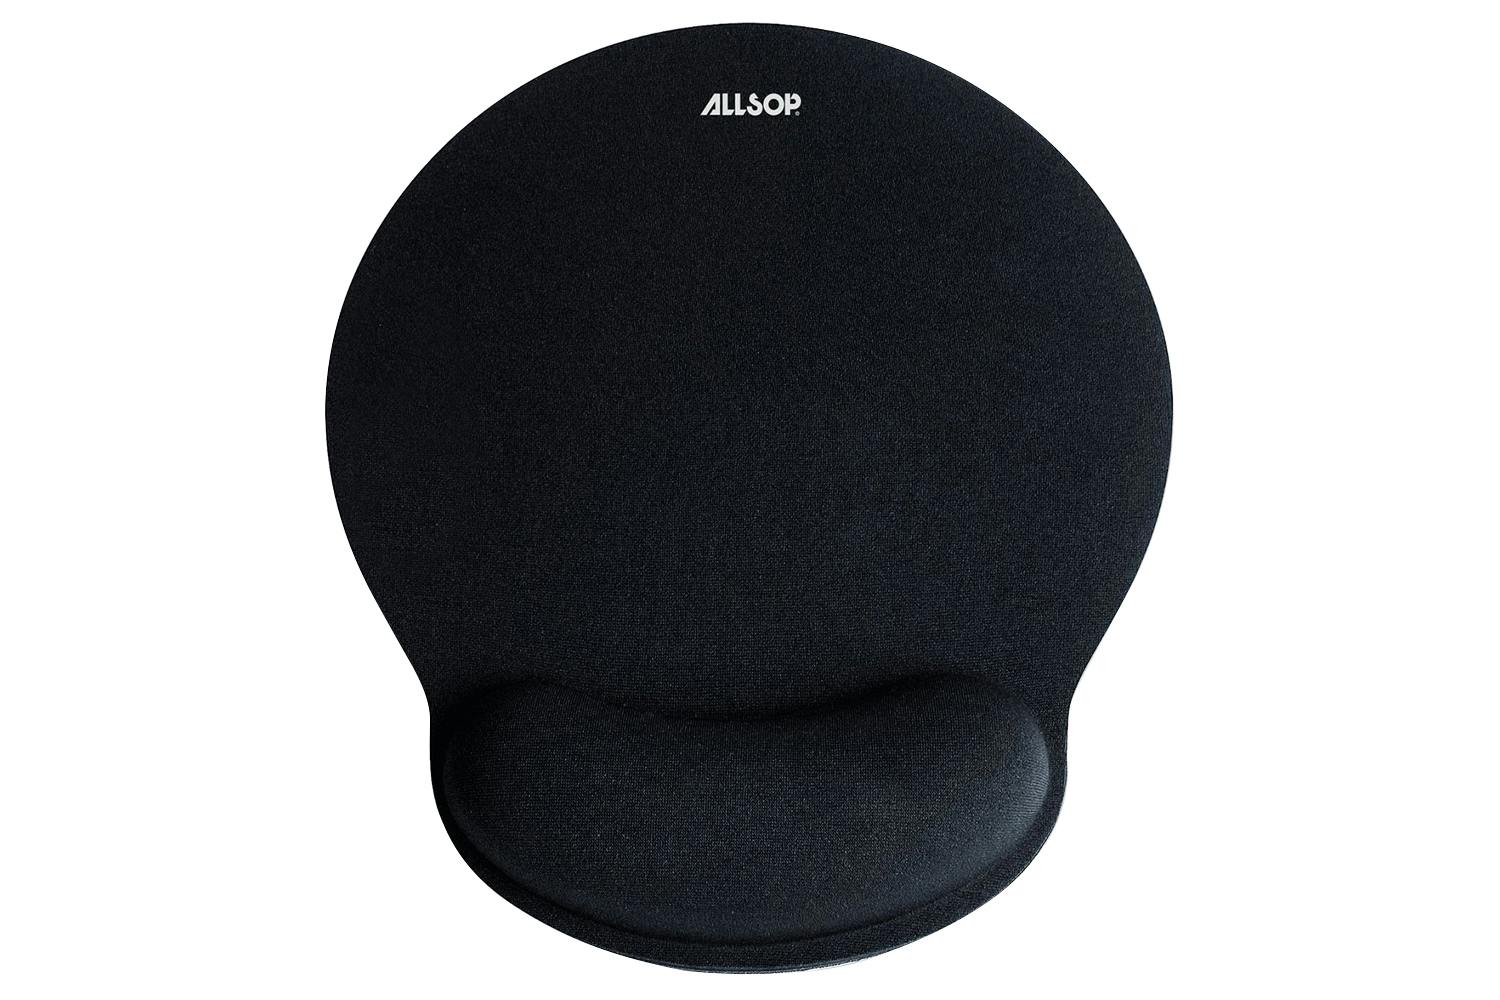 Allsop Comfortfoam Wristrest Mouse Pad | Black